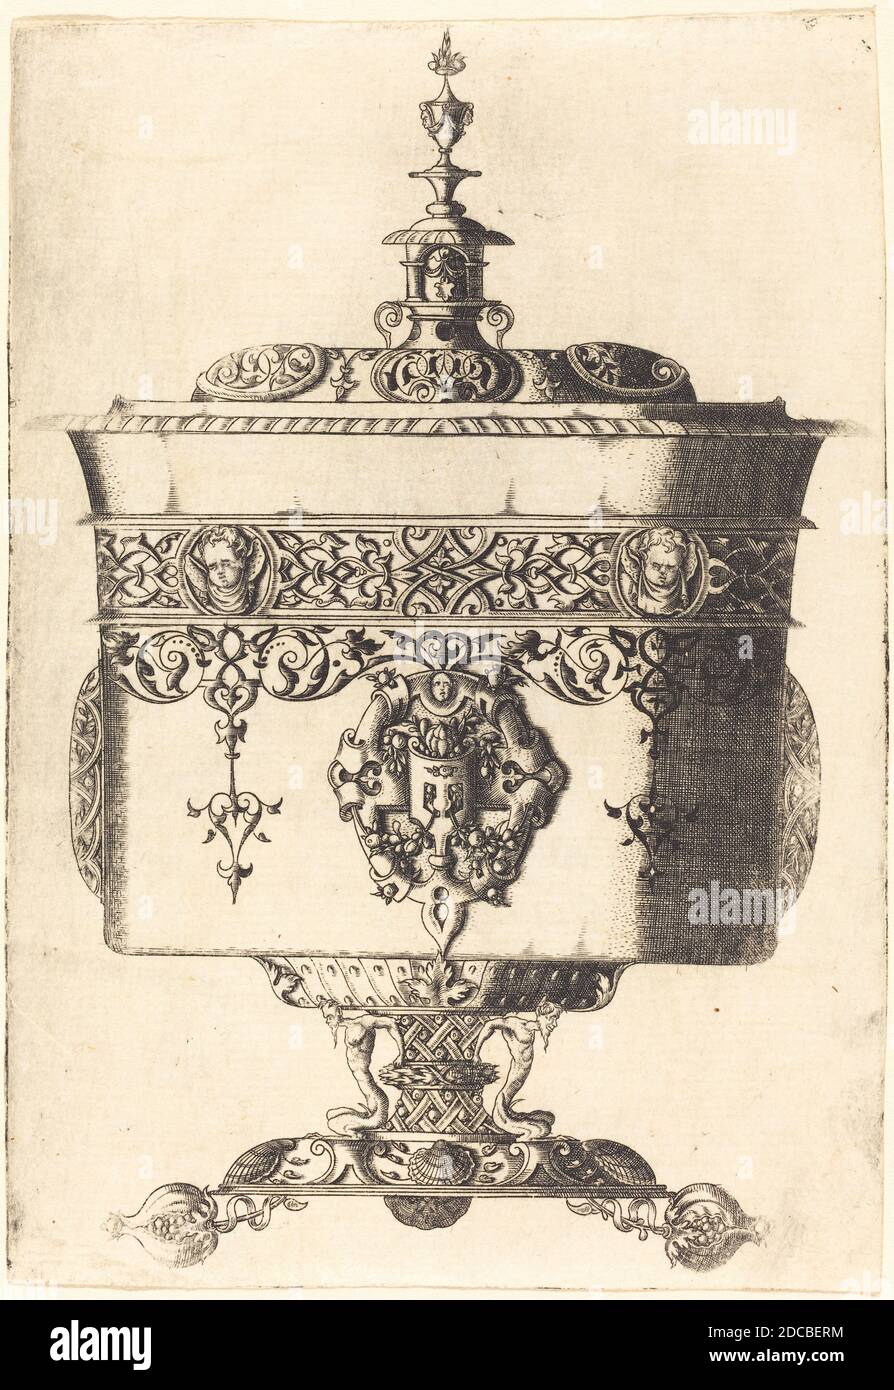 Mathis Zündt, (artista), alemán, c. 1498 - 1572, Goblet ricamente adornado, grabado Foto de stock